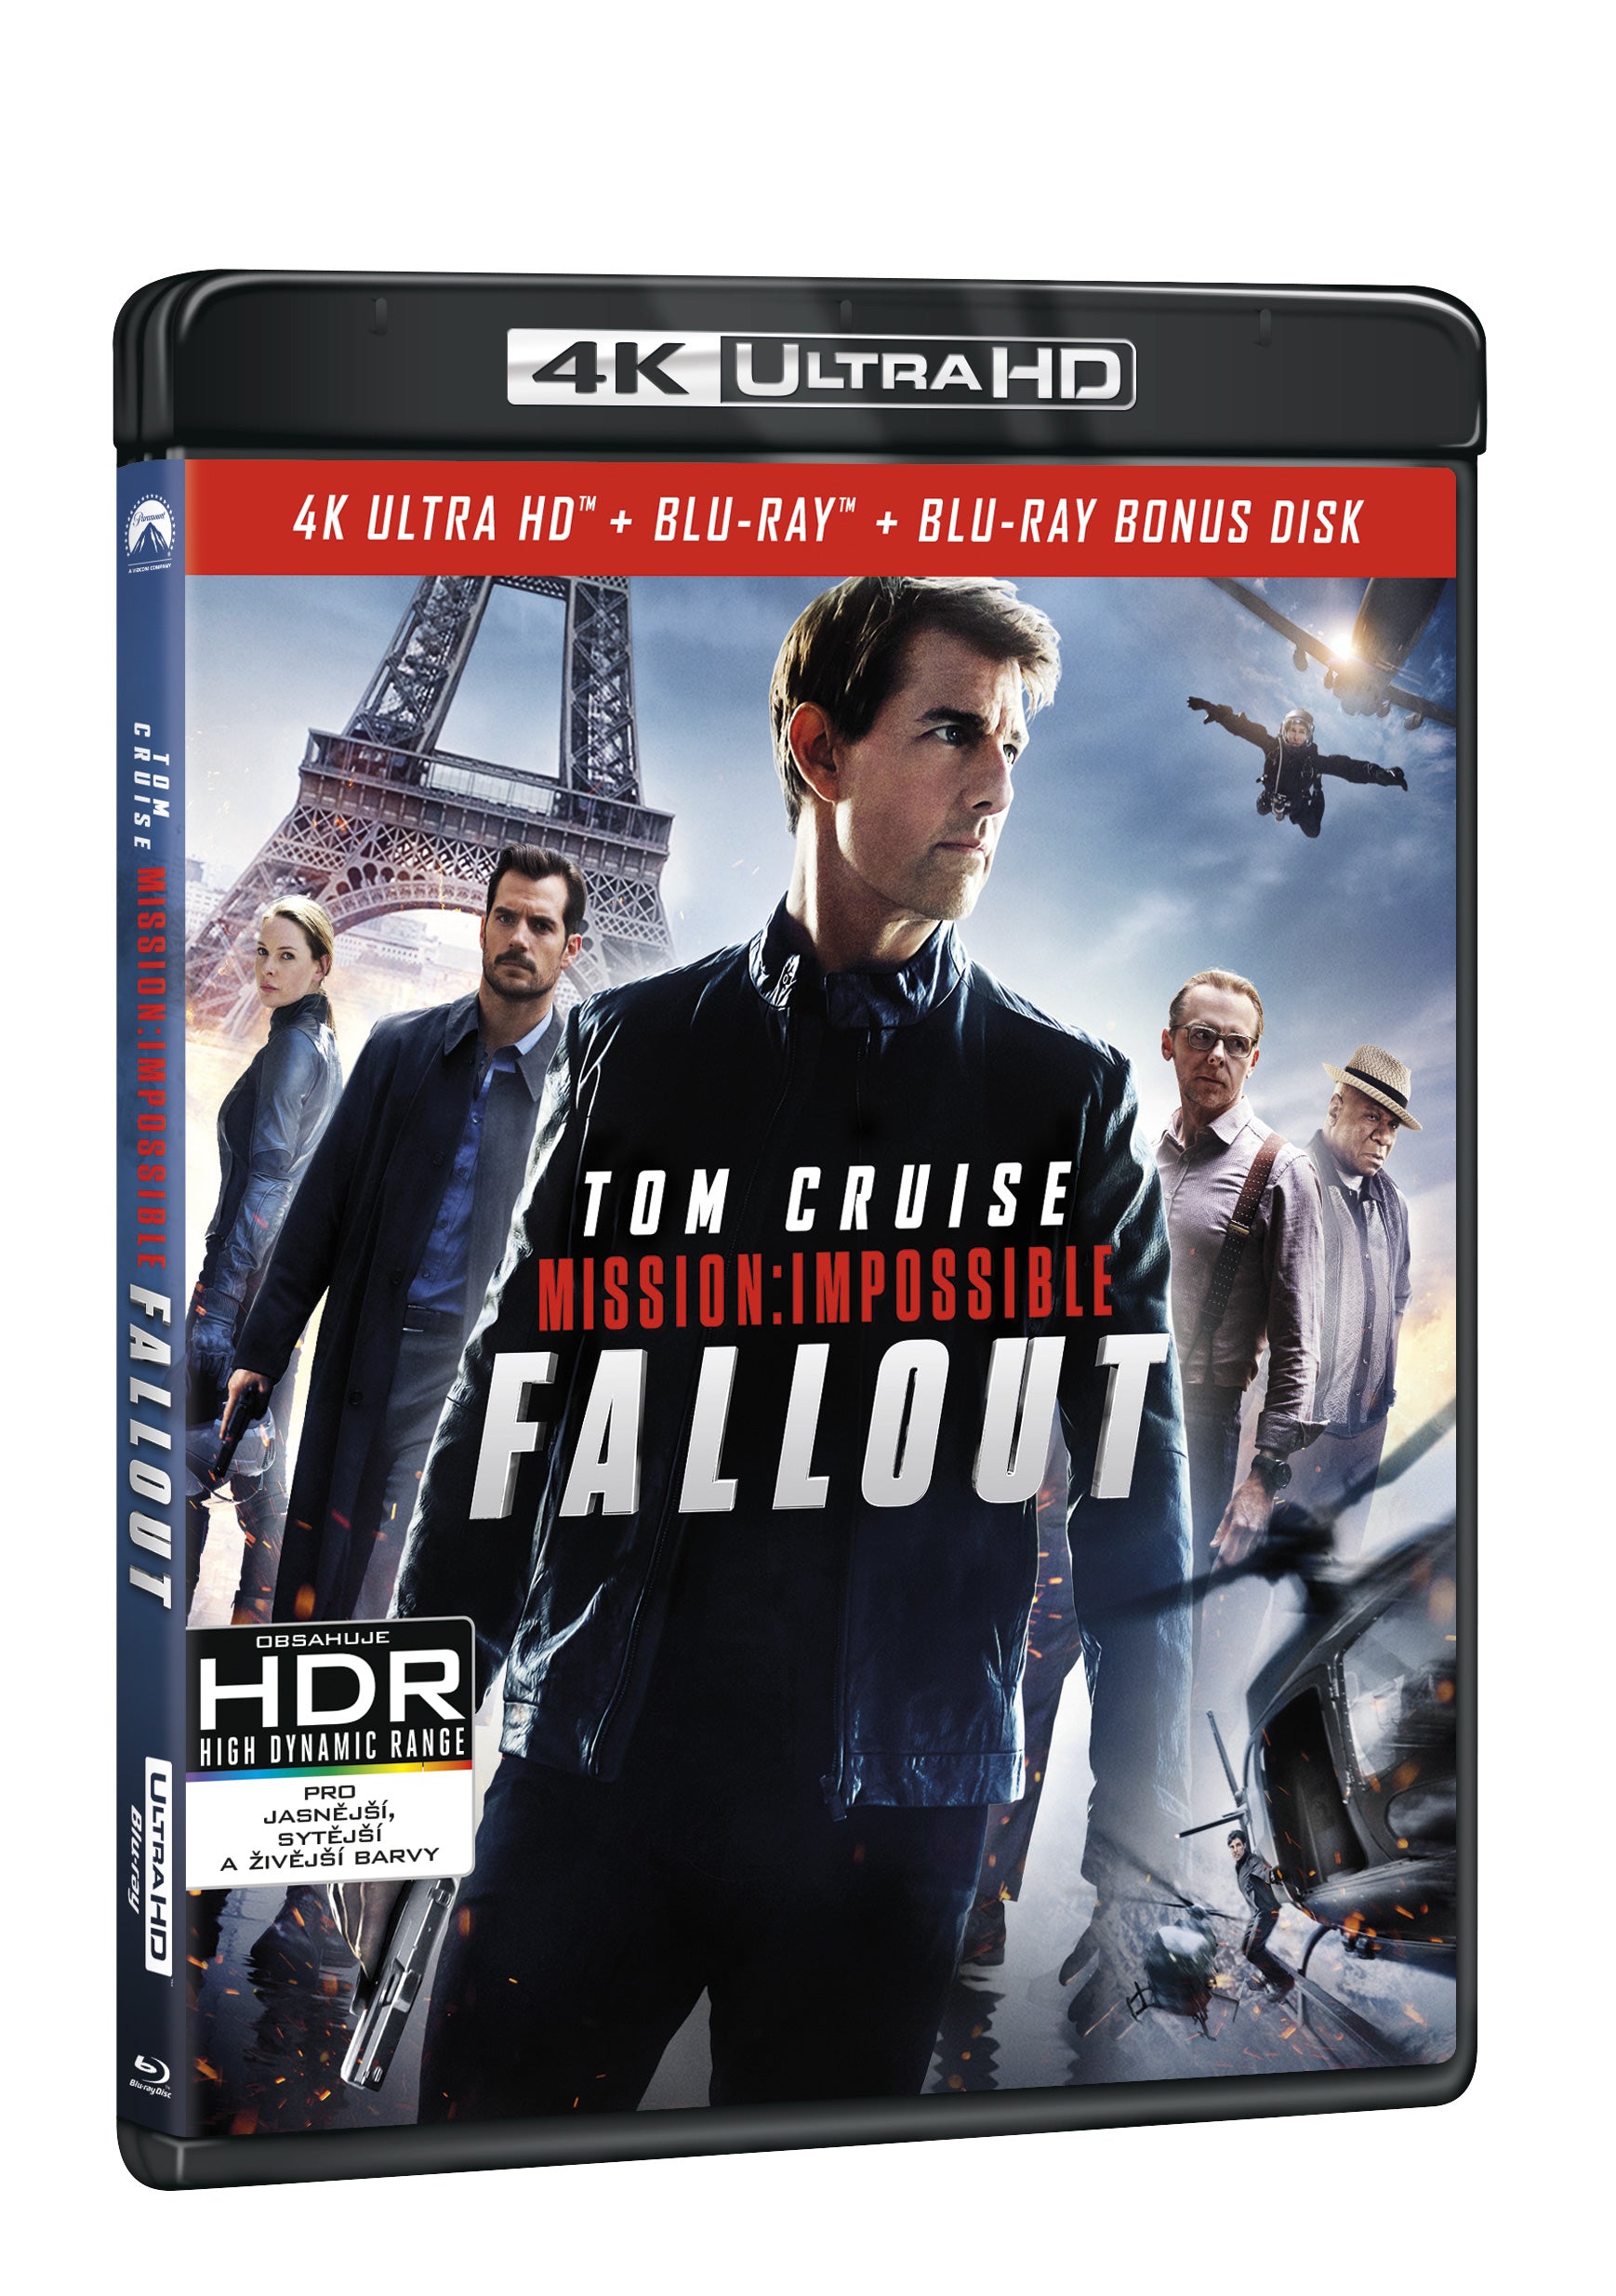 Mission: Impossible - Fallout 3BD (UHD+BD+bonus disk) / Mission: Impossible - Fallout - Czech version